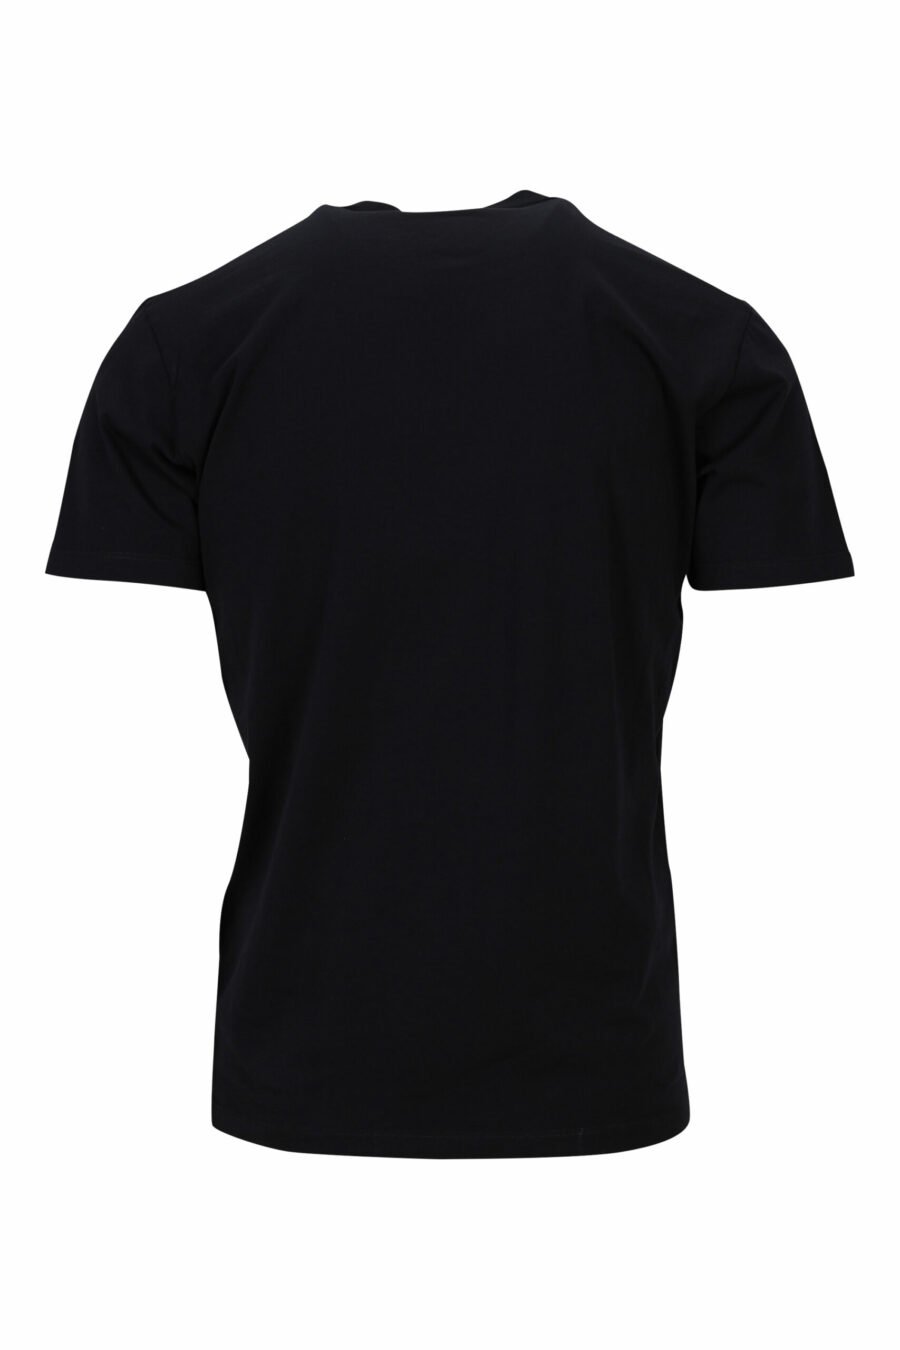 Camiseta negra con maxilogo "suburbans" blanco - 8054148503932 1 scaled